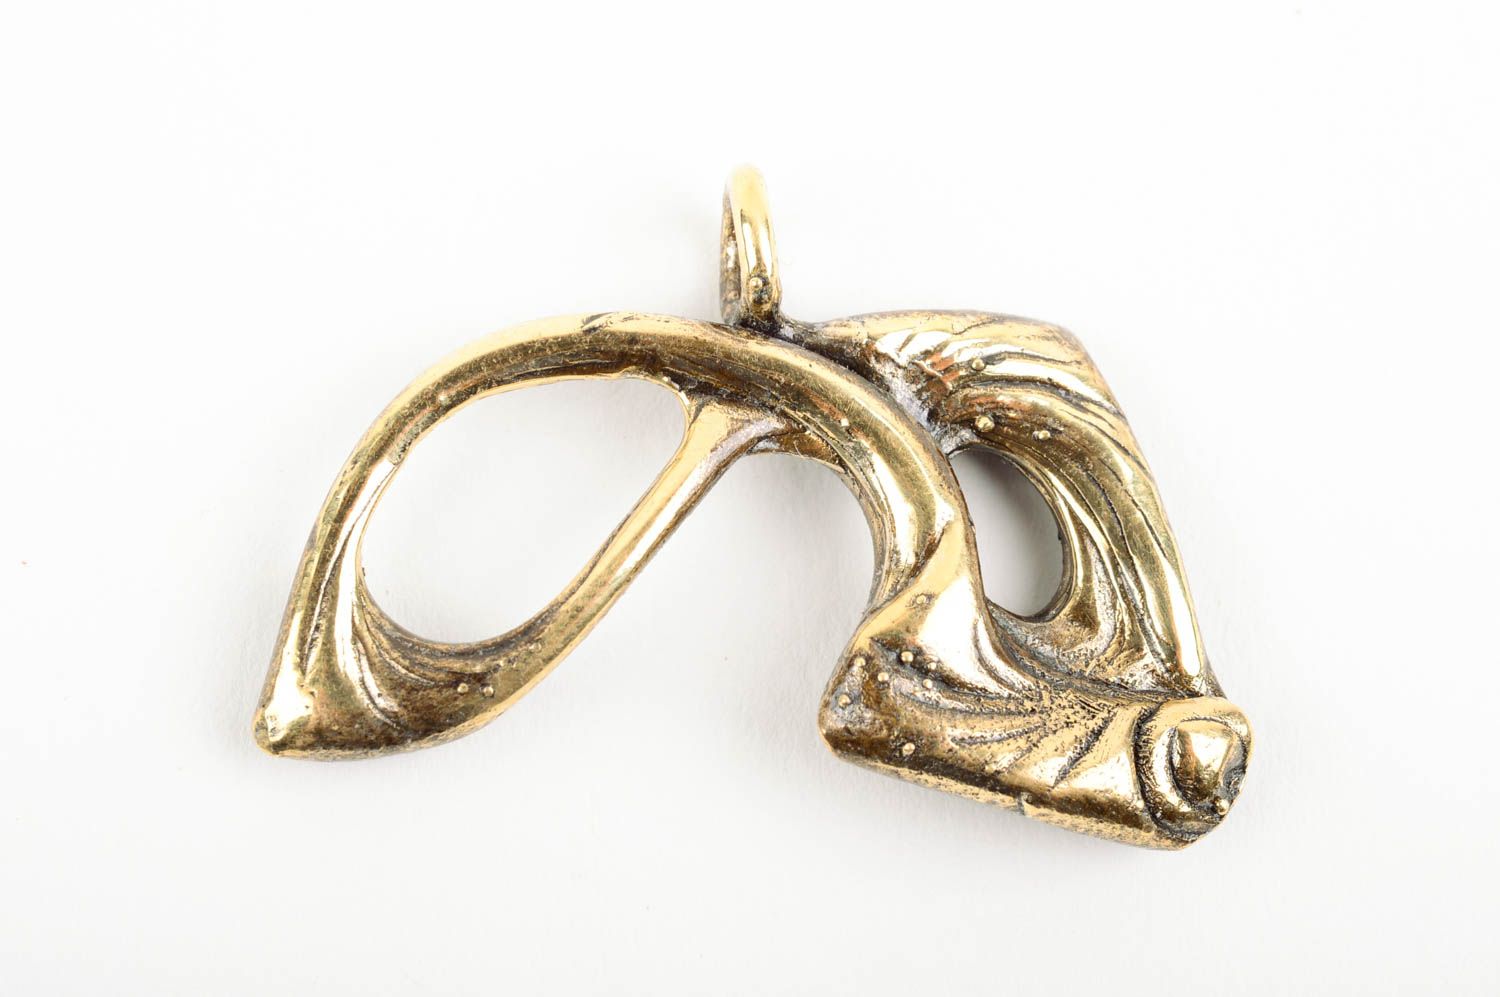 Stylish homemade brass pendant unusual metal pendant jewelry designs gift ideas photo 1